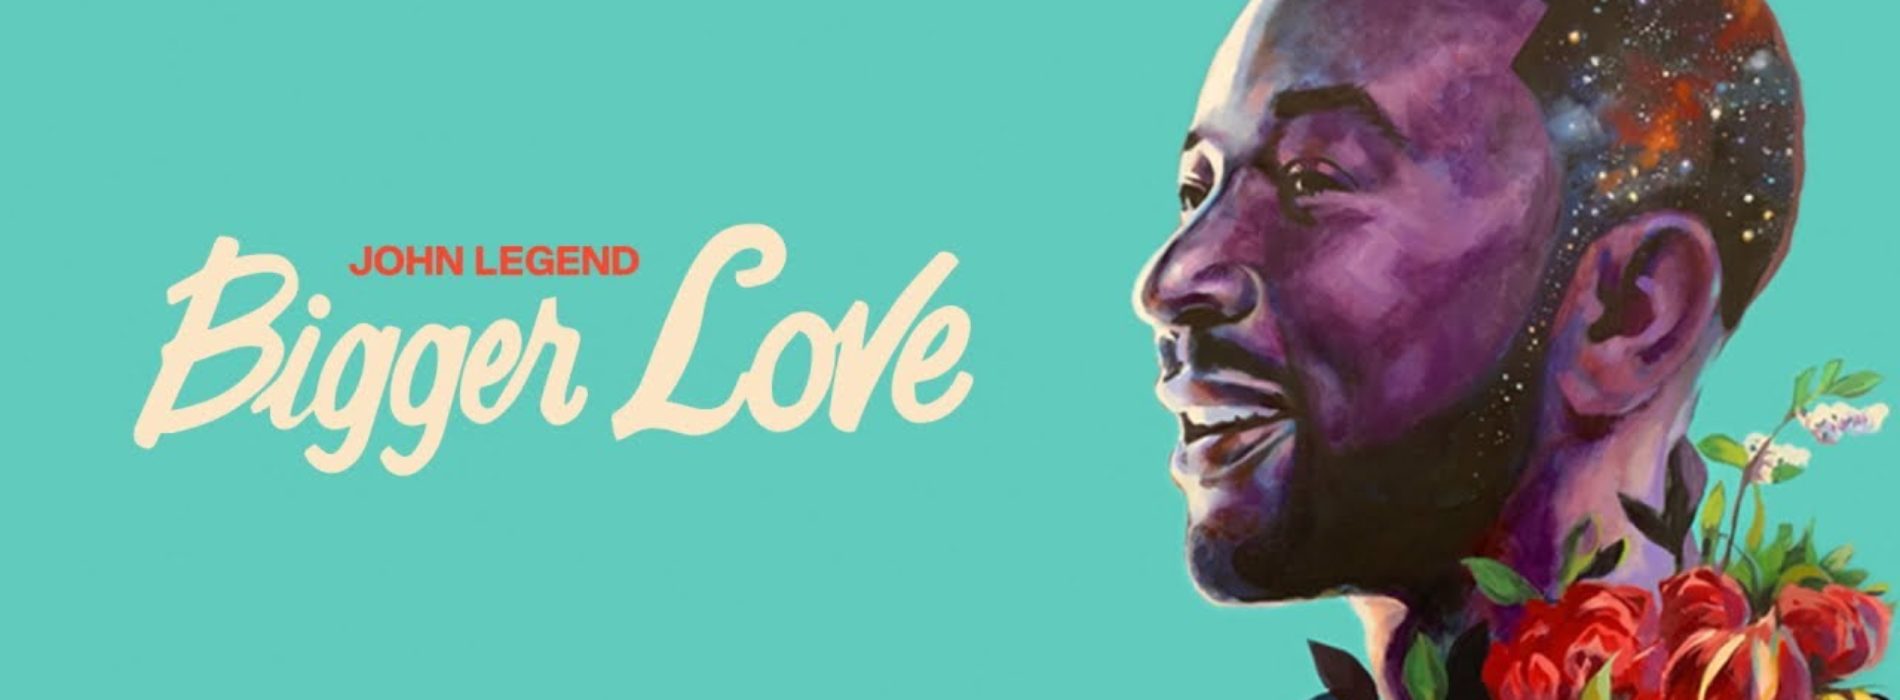 John Legend « bigger love » – U Move, I Move  ft. Jhené Aiko / Koffee – Don’t Walk Away / Never Break / I Do / Gary Clark Jr. – Wild  /  Rapsody – Remember Us – (Official Audio) – Juin 2020